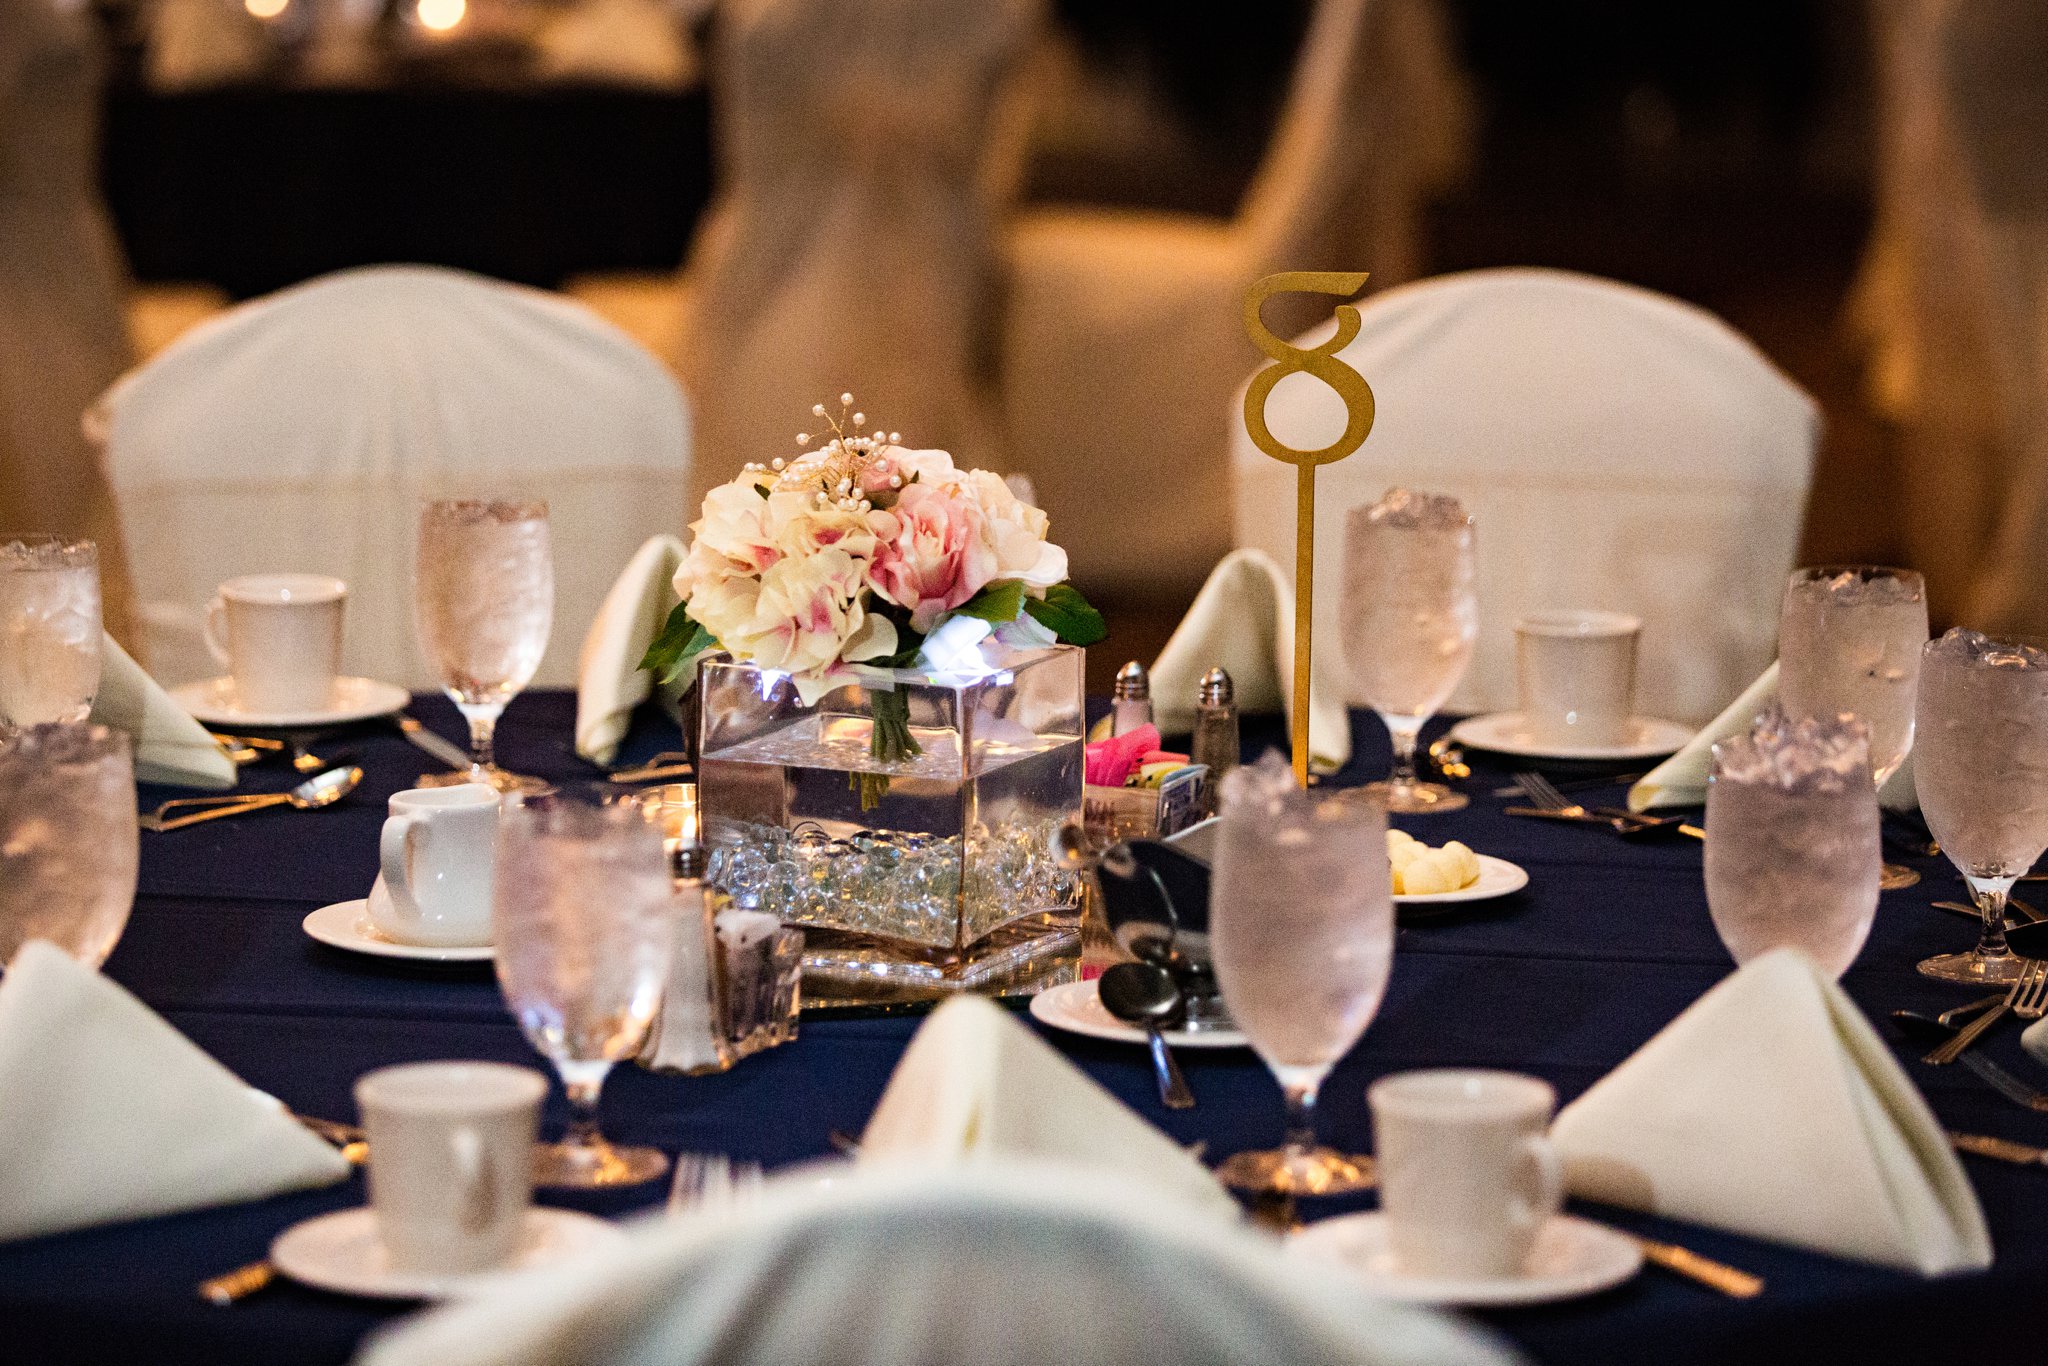 wedding | wedding photos | wedding photography | images by feliciathephotographer.com | Country Club Plaza | Kansas City | The Marriott | Unity Temple | reception venue | navy tablecloths | centerpieces 